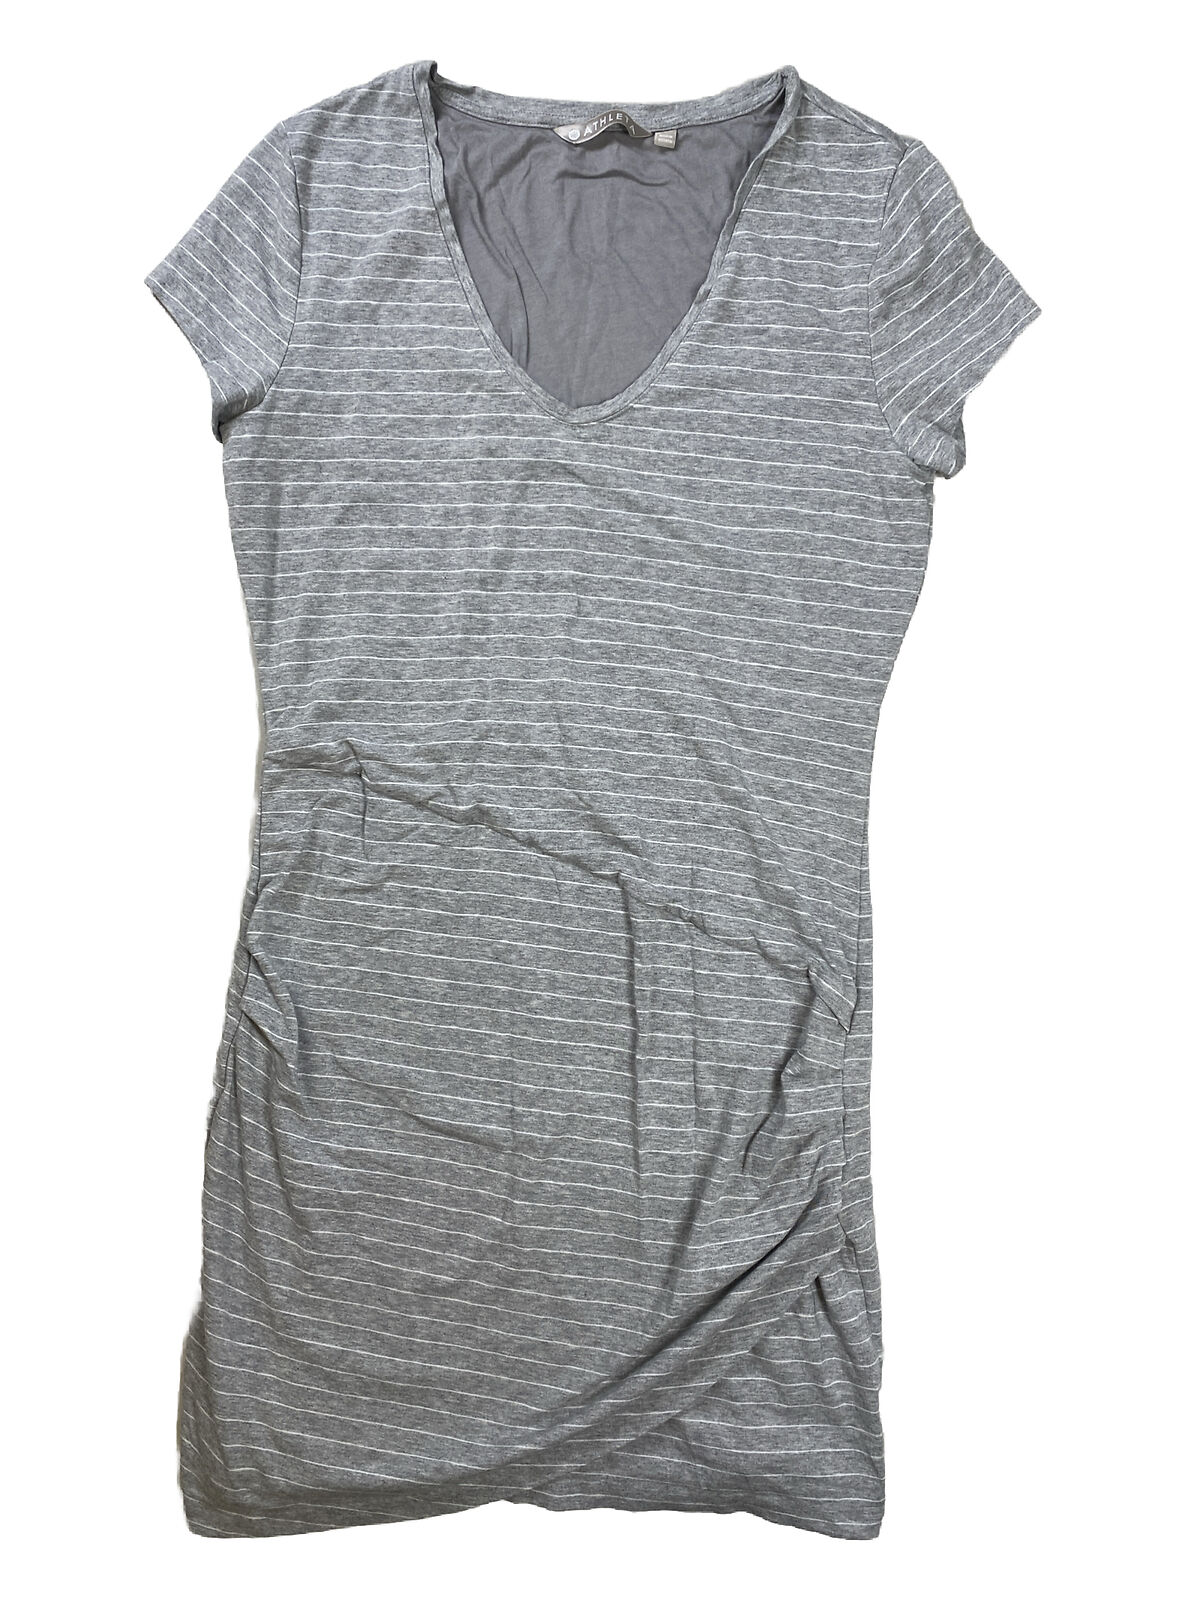 Athleta Women's Gray Striped Central Short Sleeve T-Shirt Dress - L